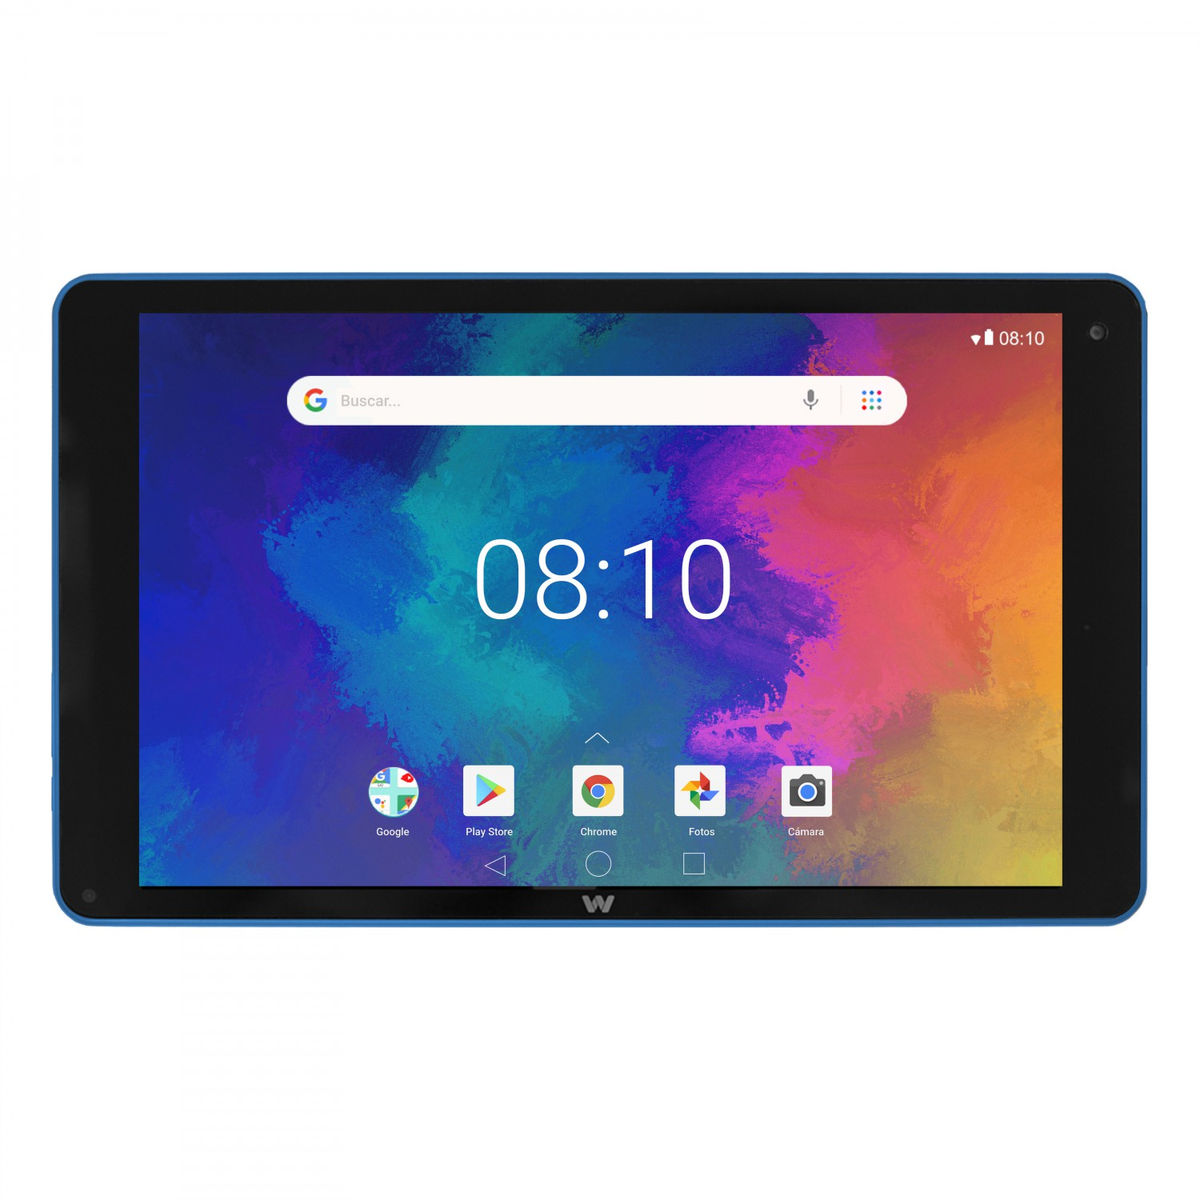 Zoll, GB, 10,1 TB26-373, 64 WOXTER Blau Tablet,